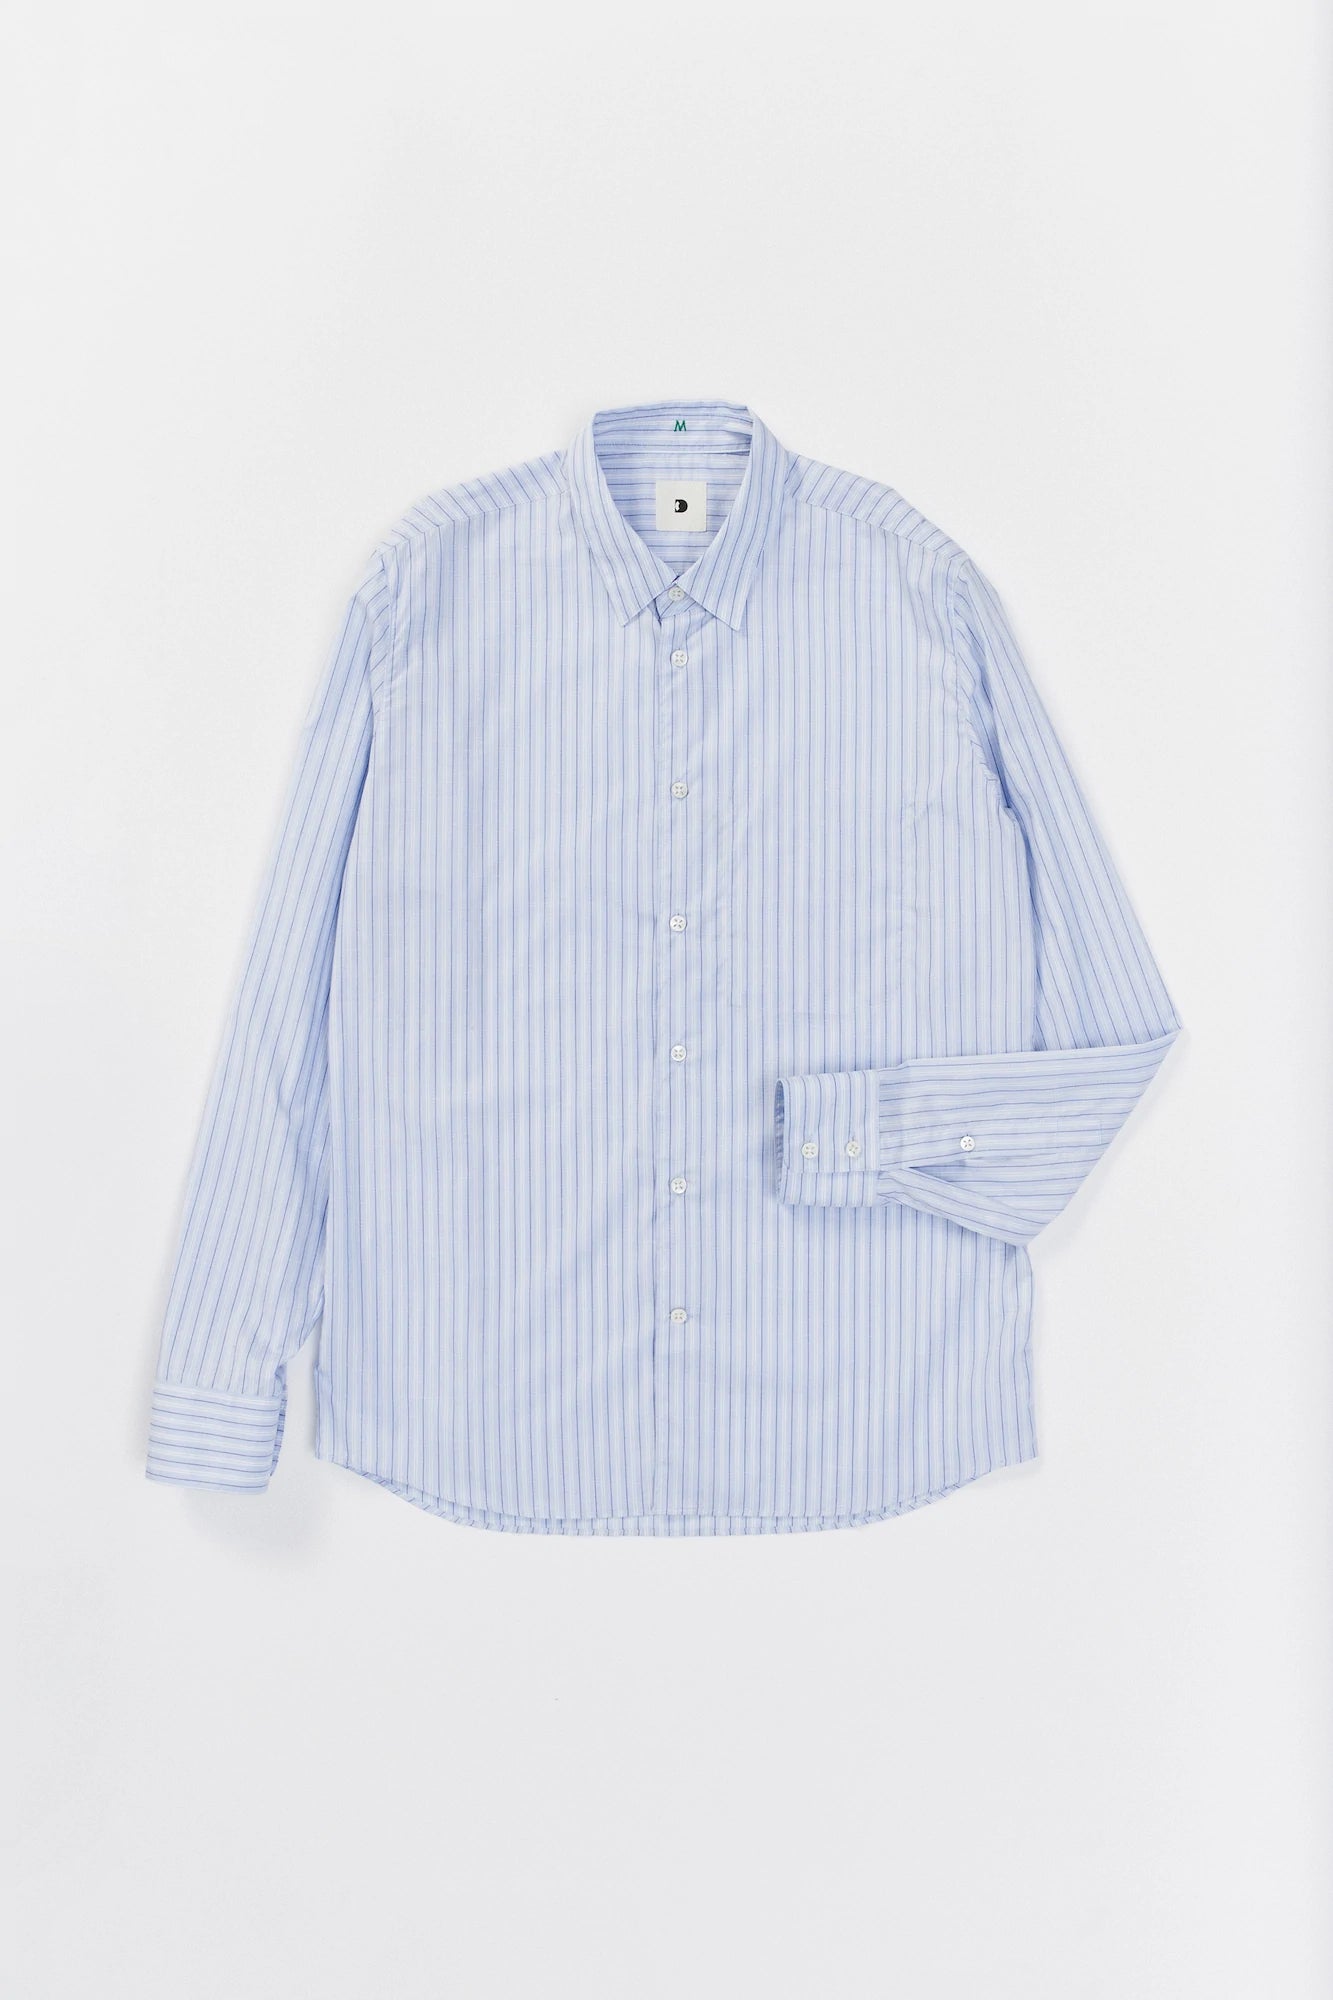 feel-good-shirt-in-the-finest-blue-striped-italian-cotton-poplin-by-albini